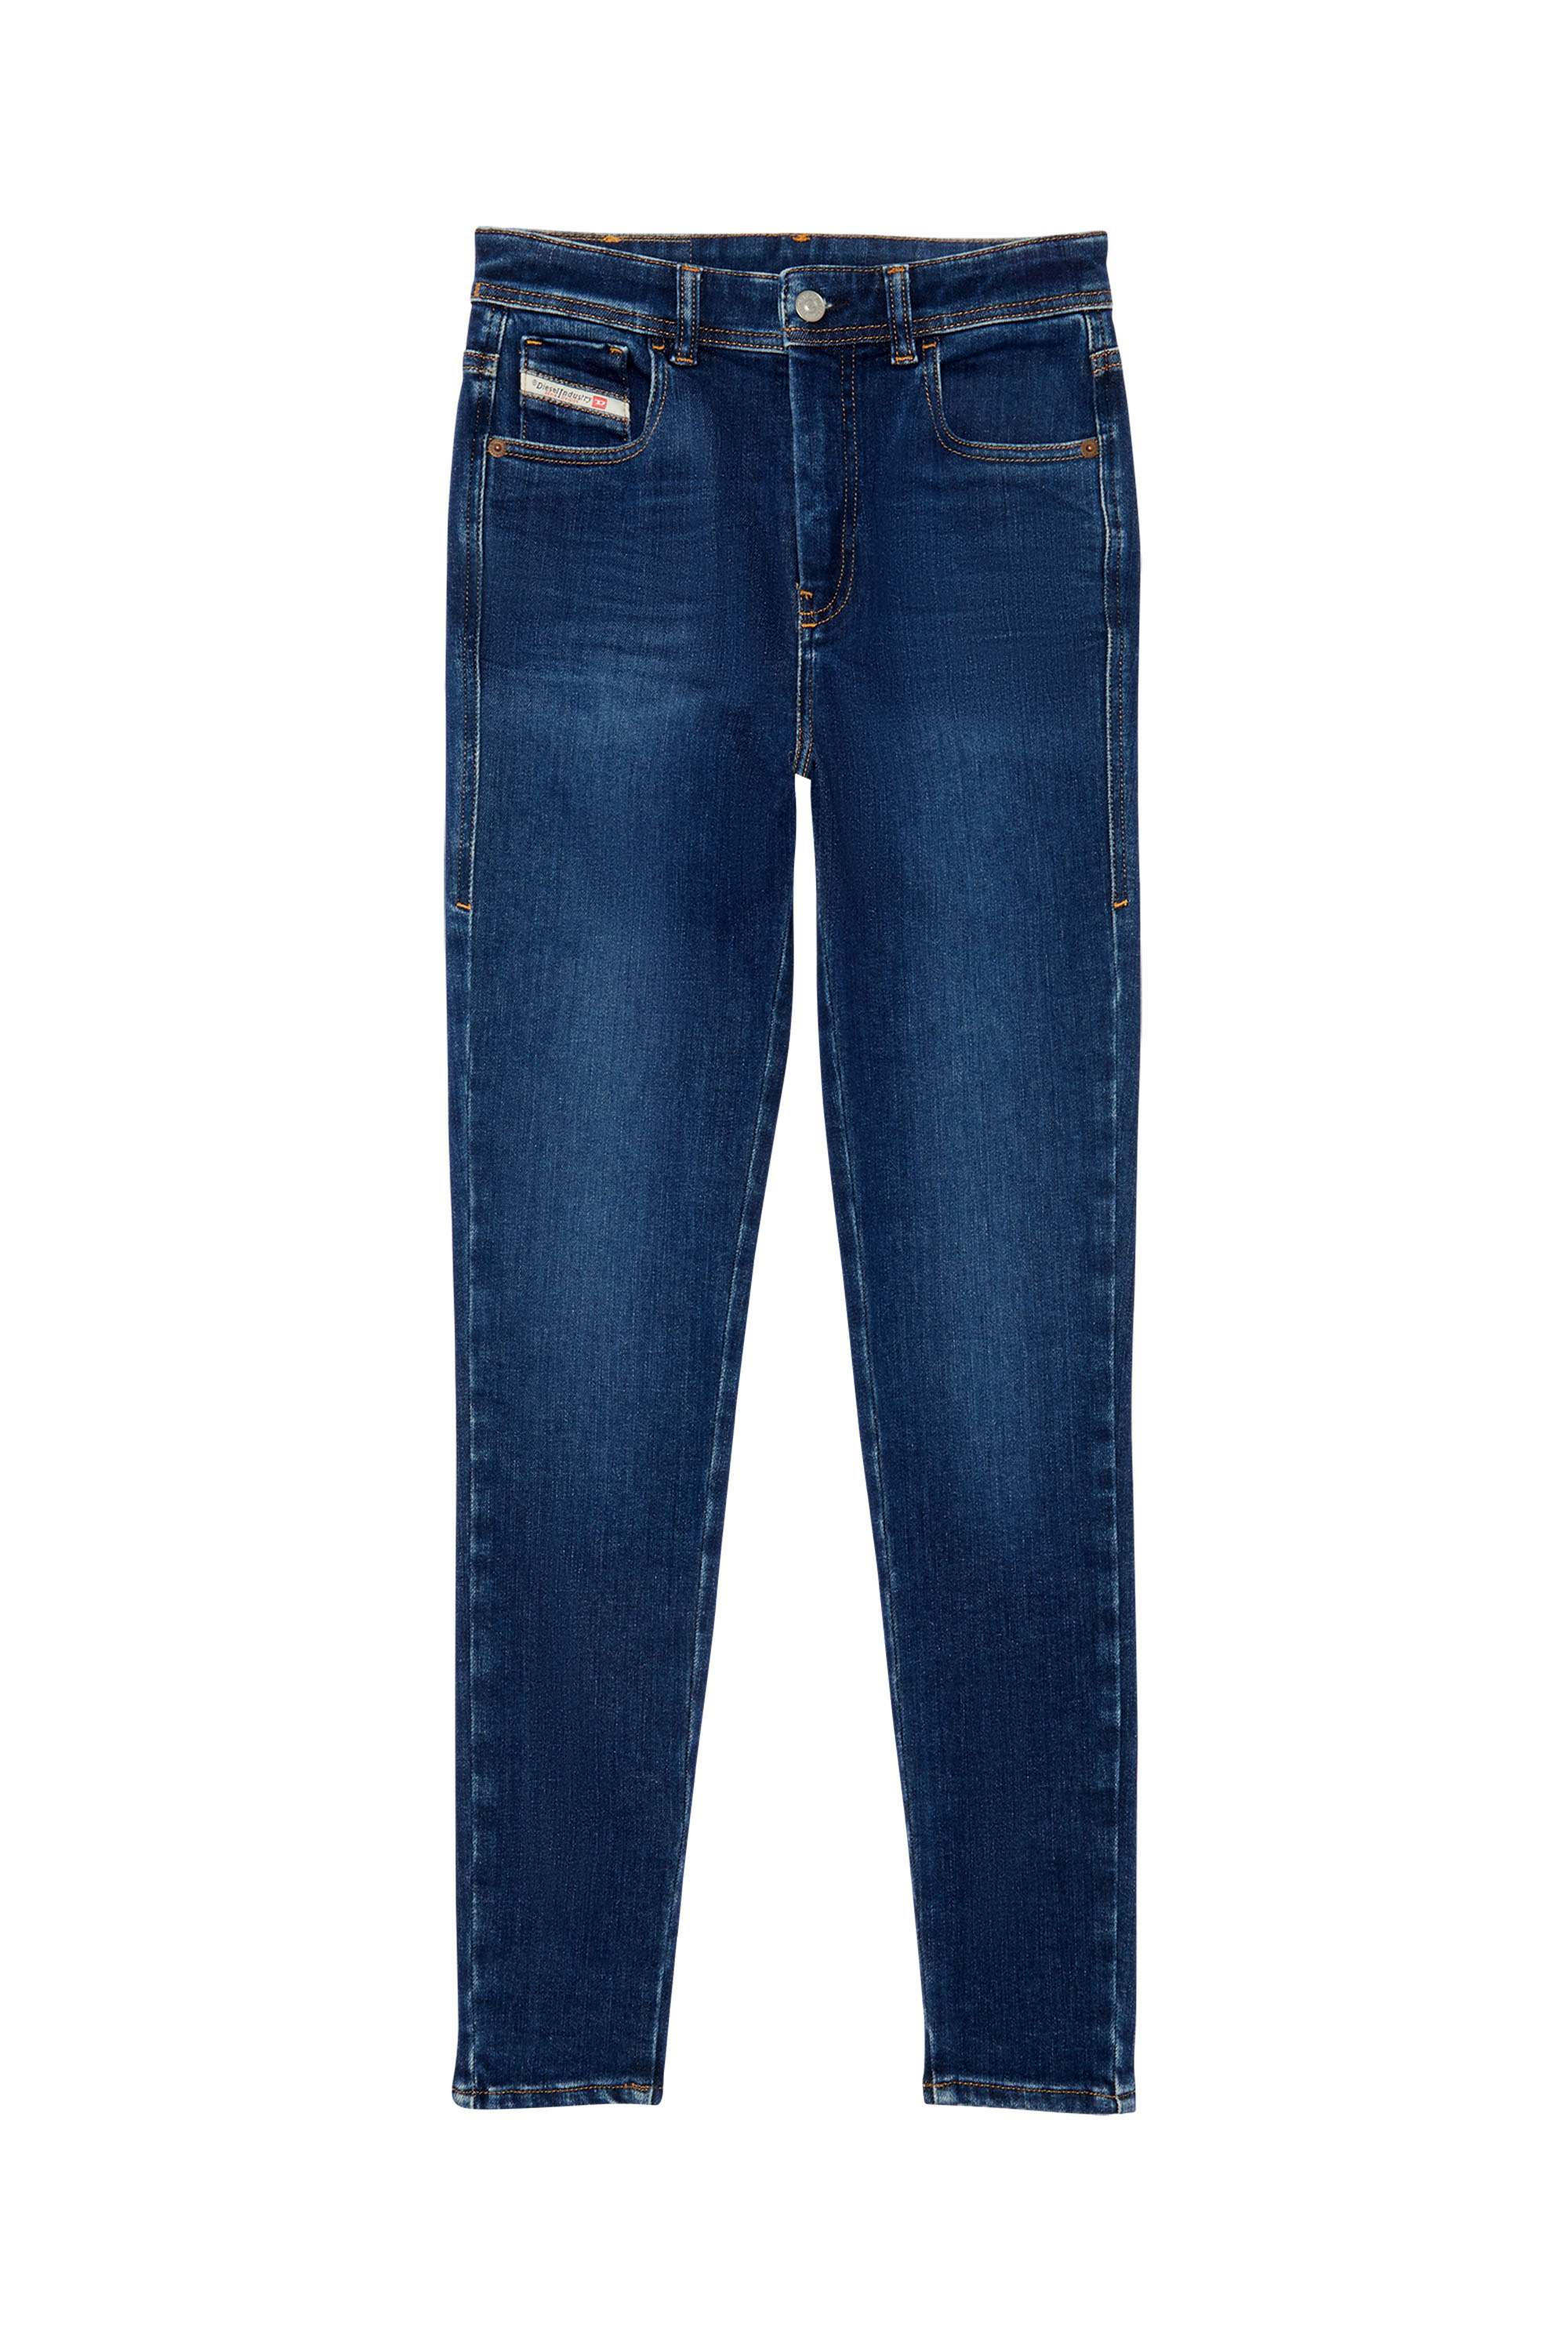 1984 Slandy-High 09C19 Super skinny Jeans, Dark Blue